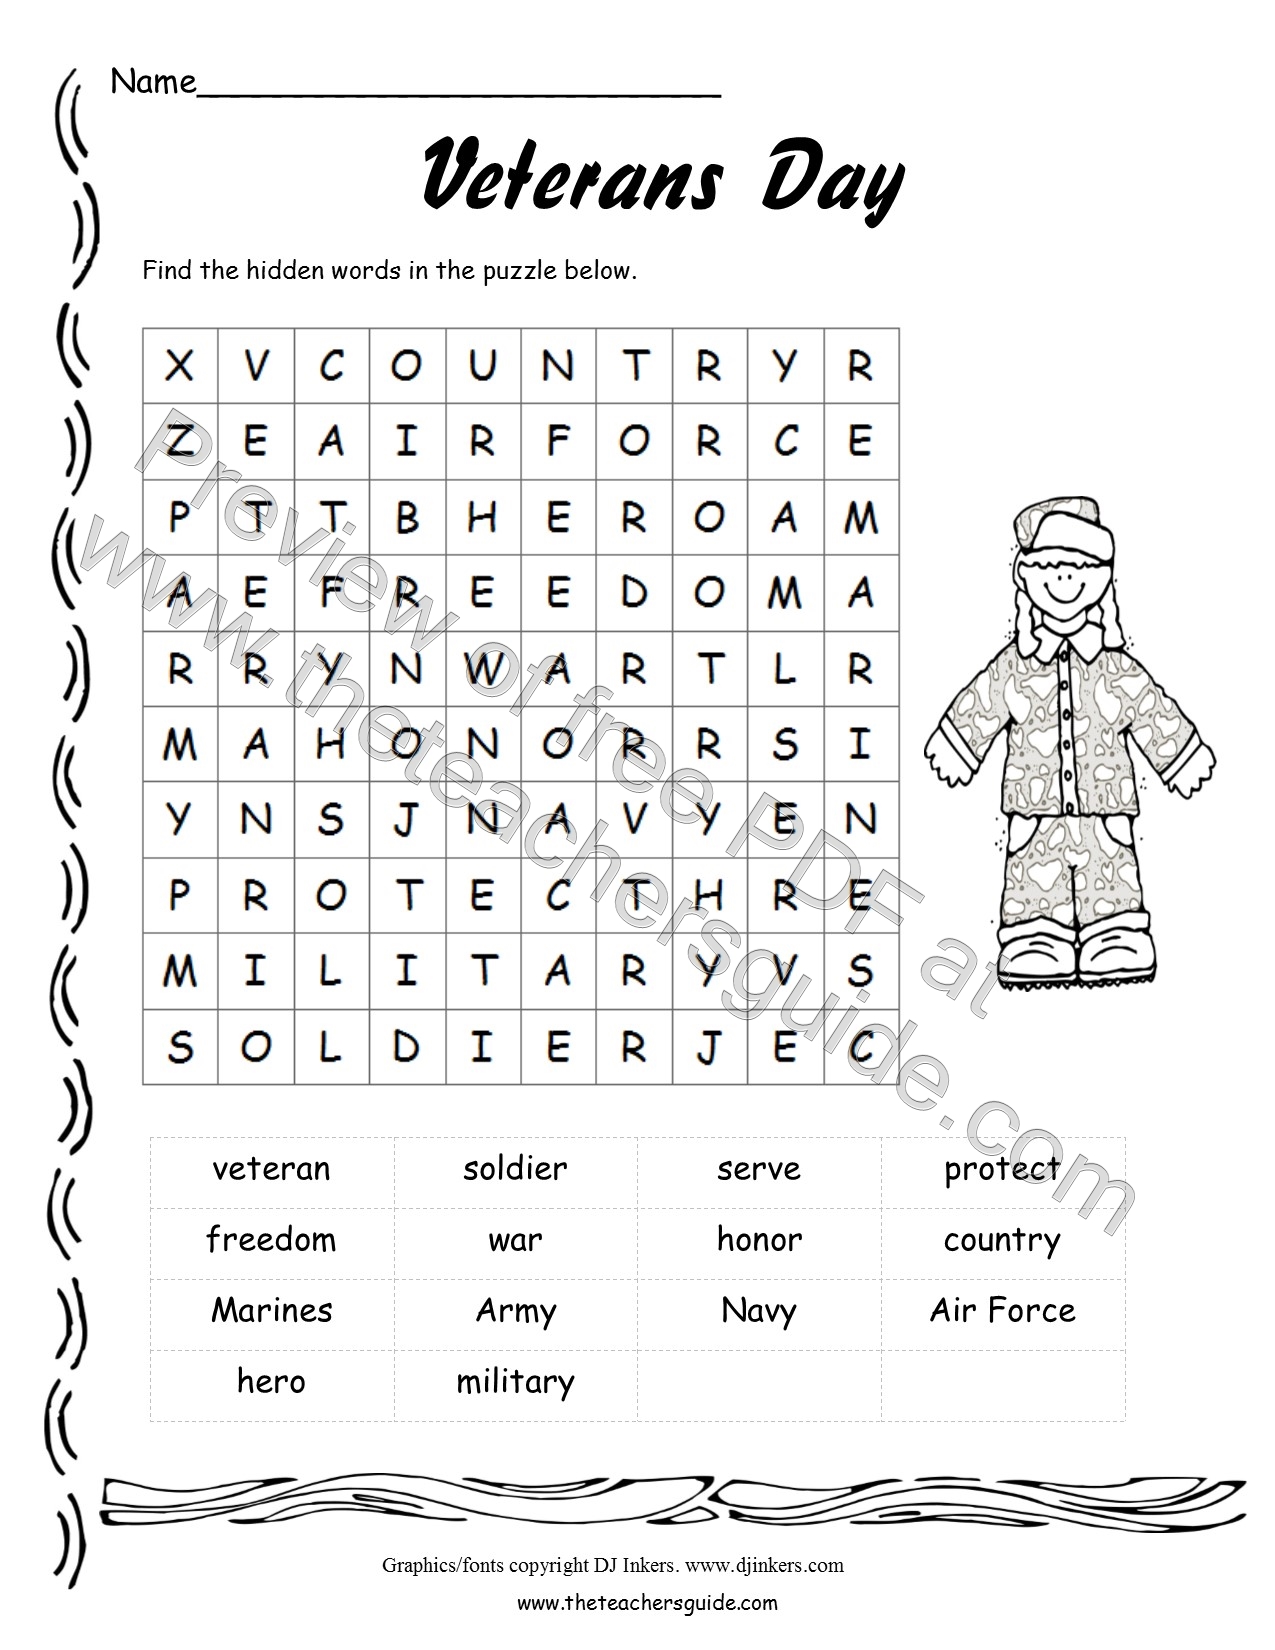 Veterans' Day Lesson Plans, Themes, Printouts, Crafts